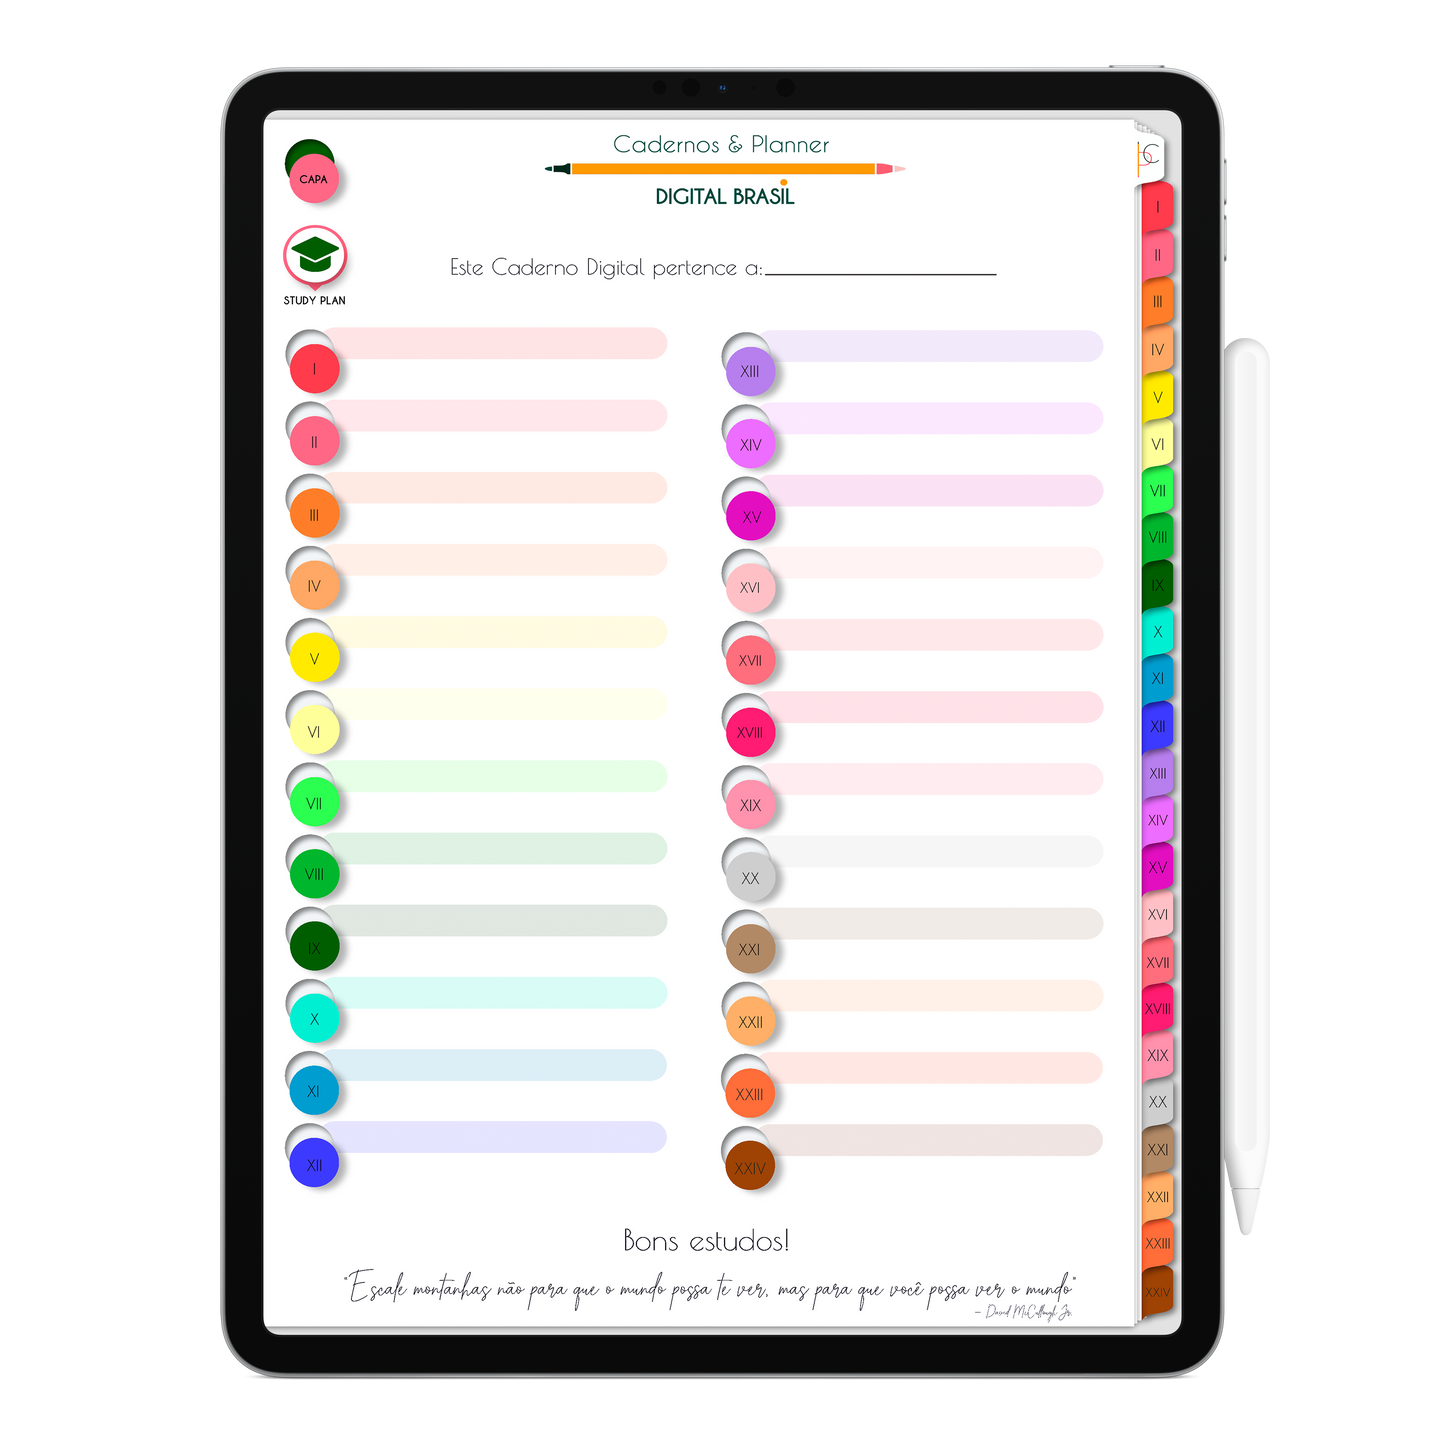 Caderno Digital Colors 24 Matérias Plain Pink • Para iPad e Tablet Android • Download instantâneo